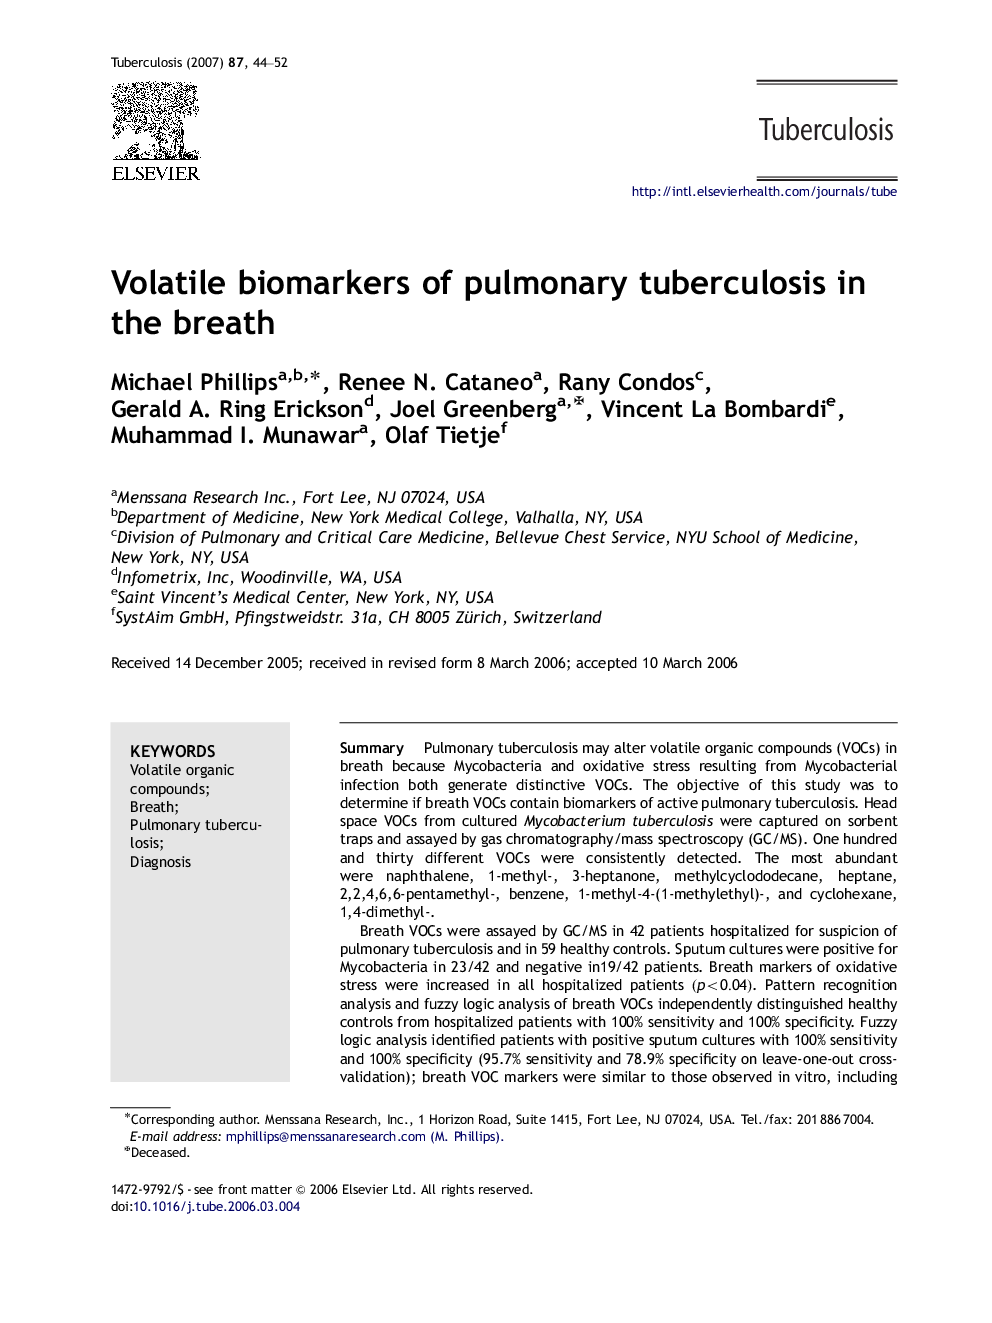 Volatile biomarkers of pulmonary tuberculosis in the breath